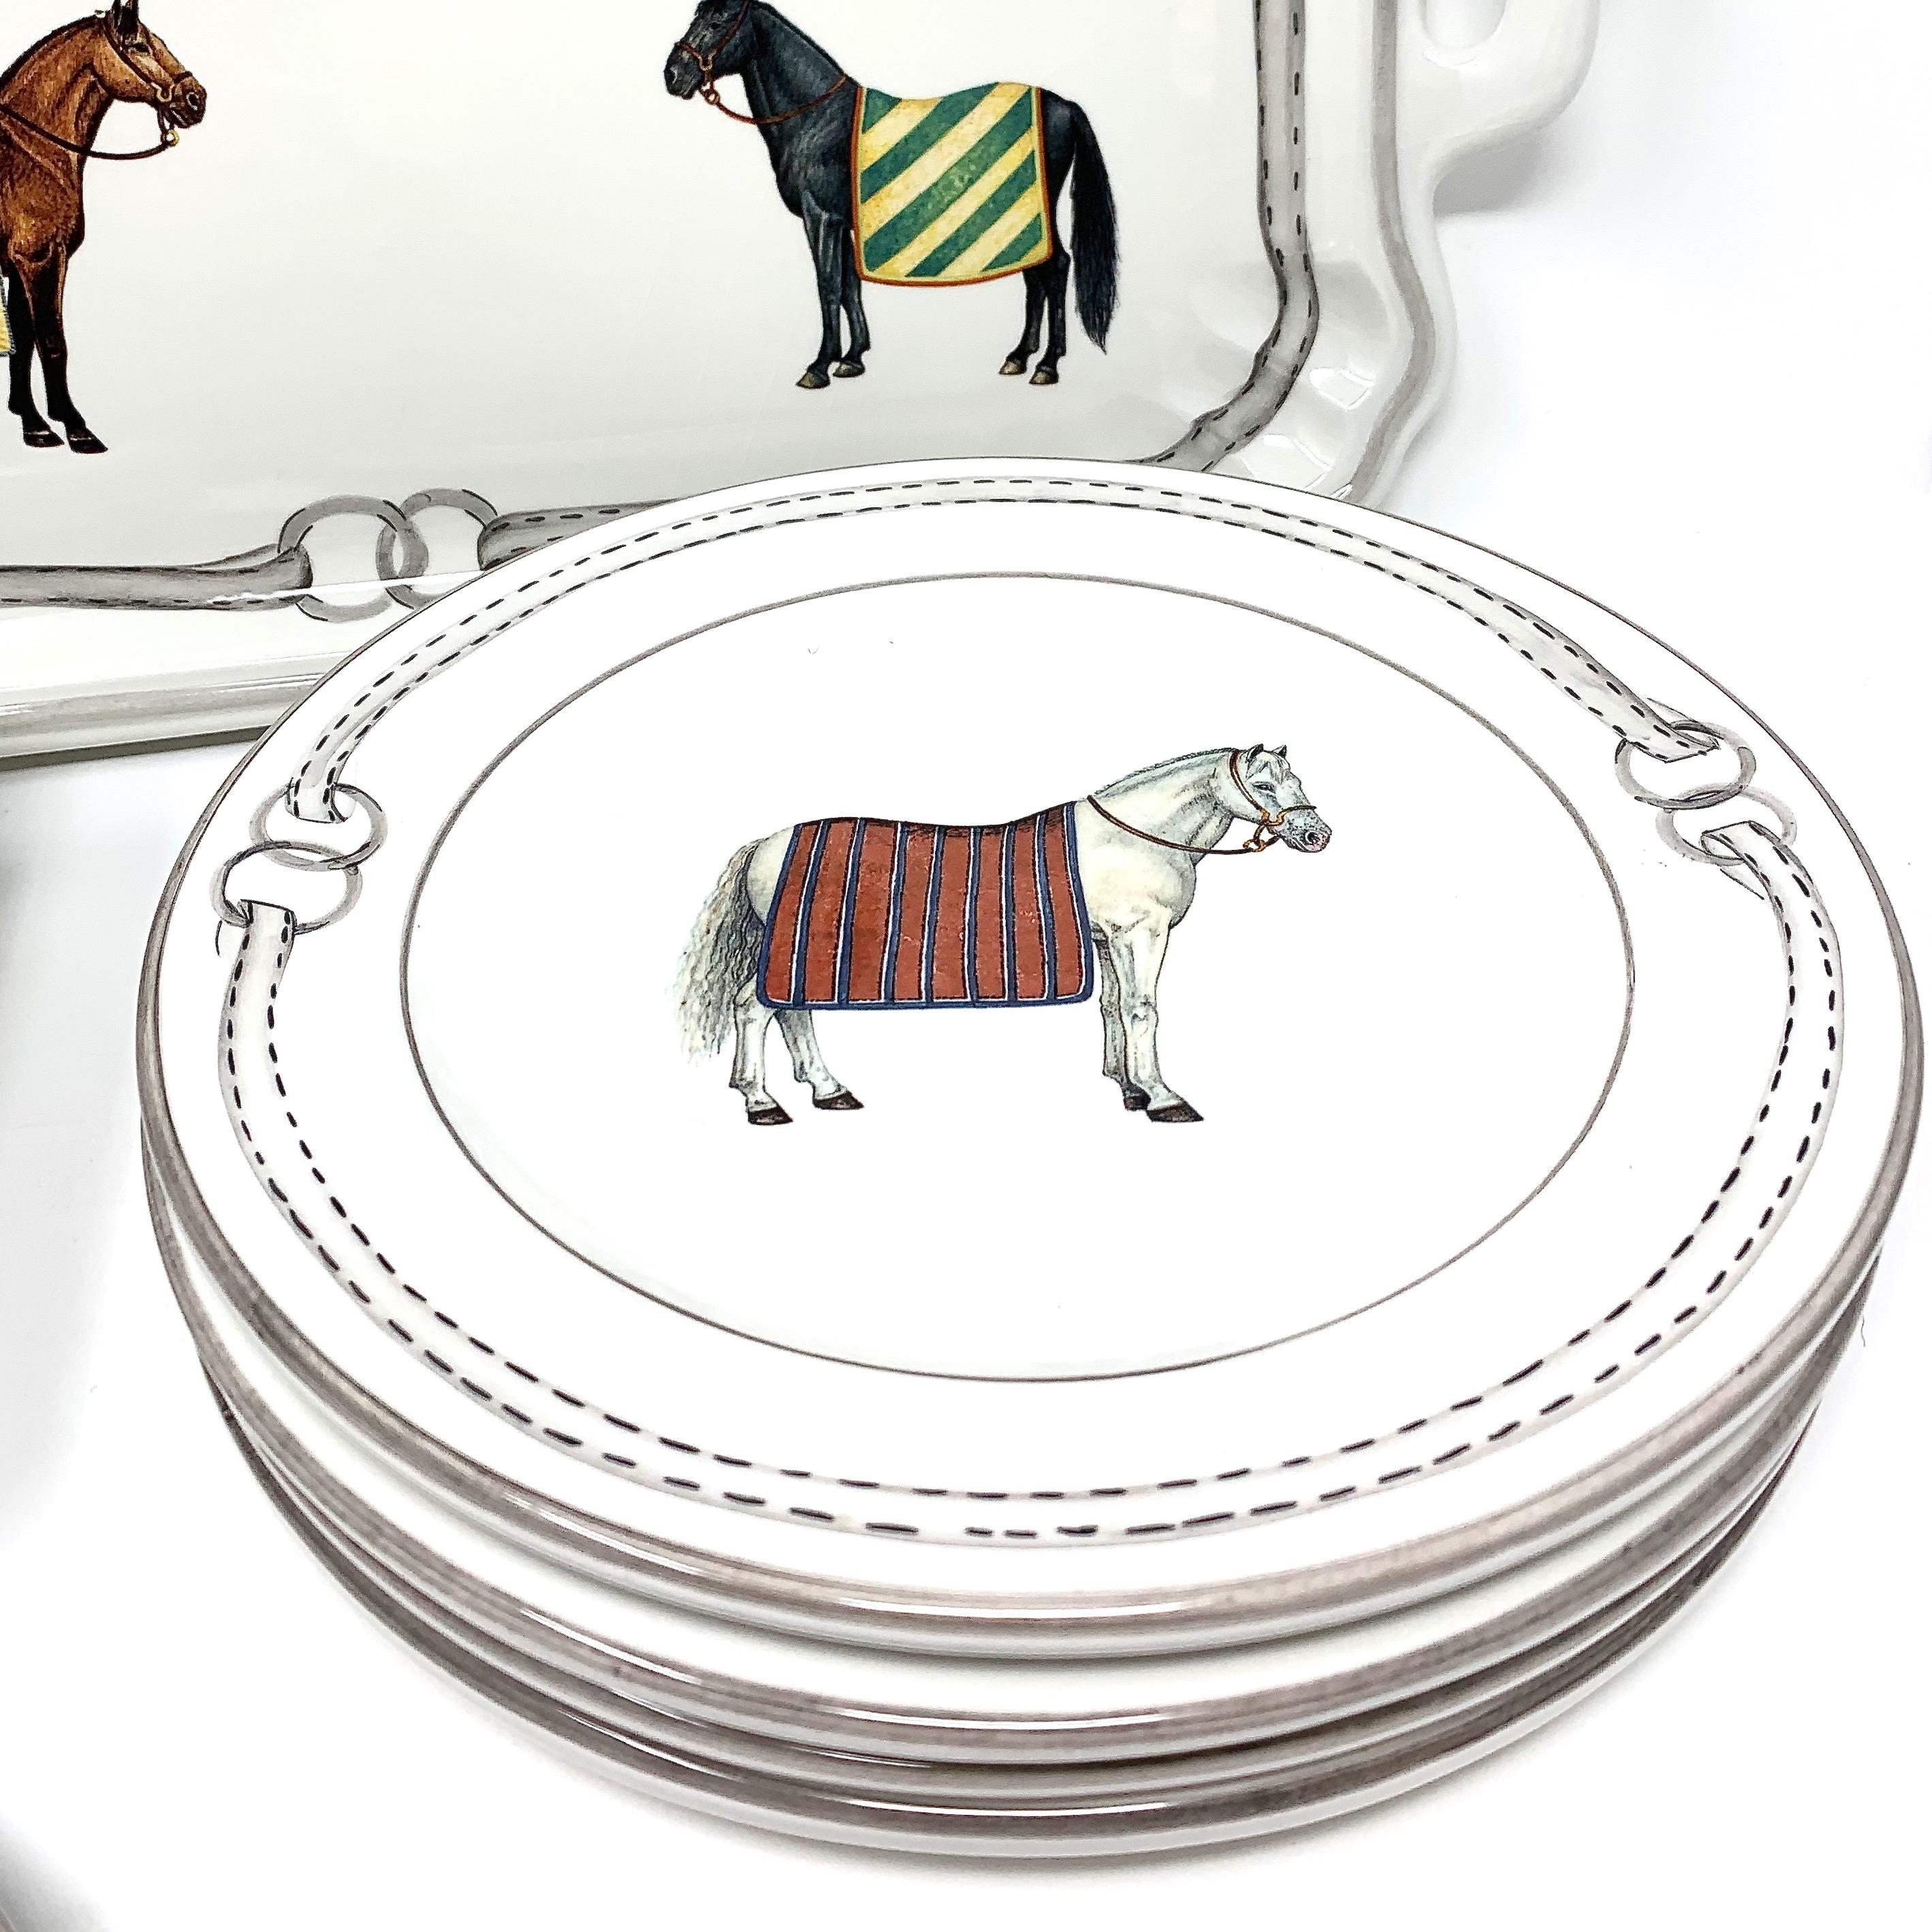 Contemporary Devon Equestrian Ceramic Dinner Plates S/4, Made in Italy For Sale